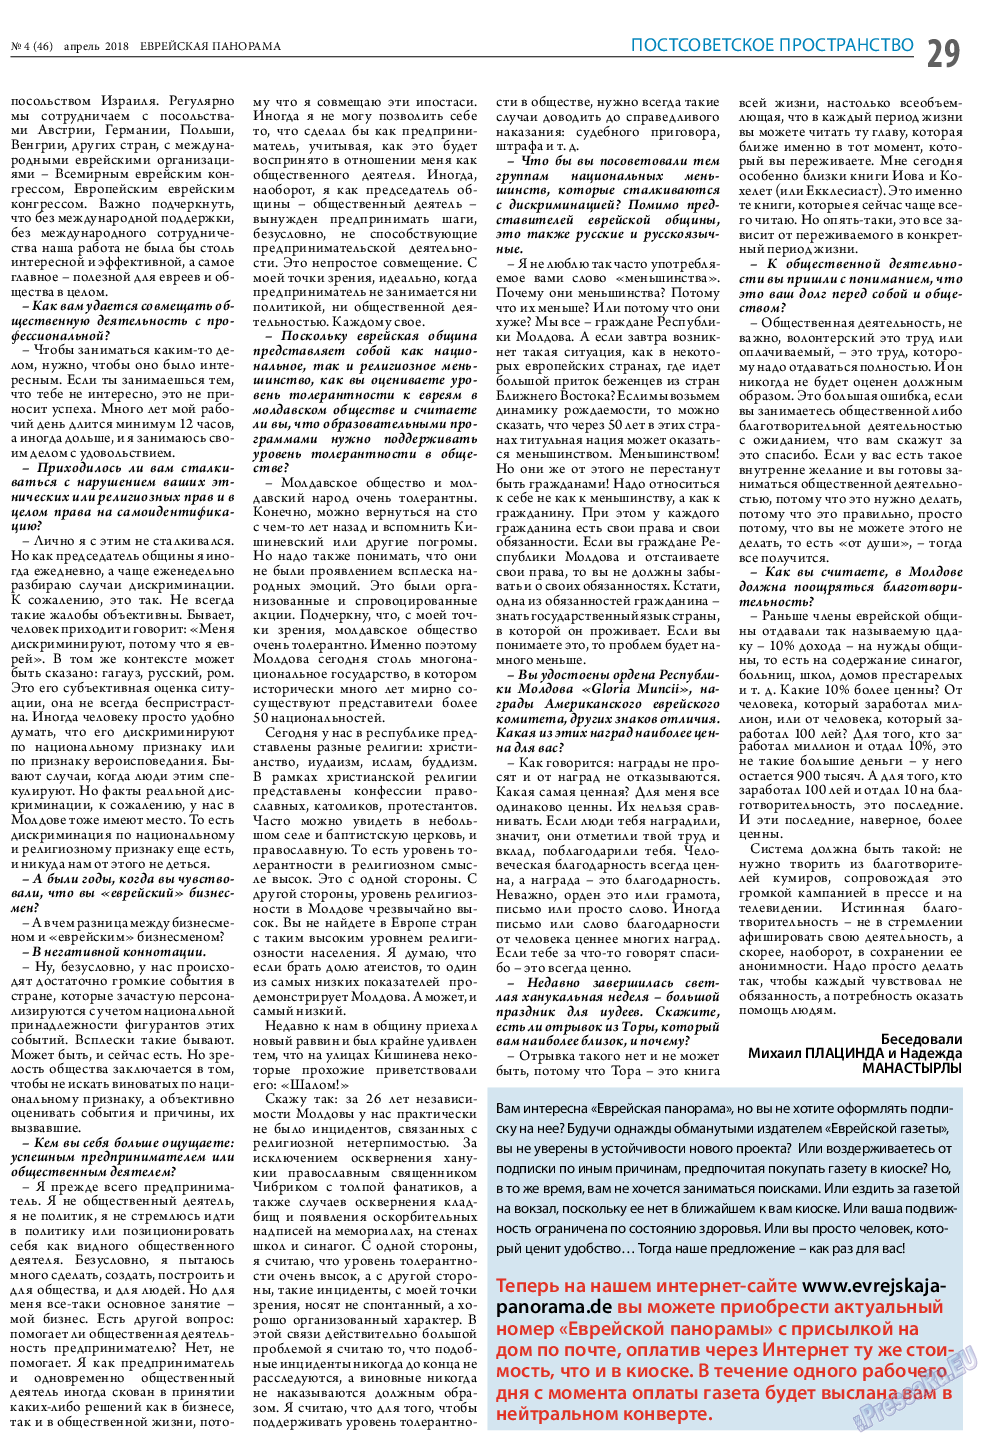 Еврейская панорама, газета. 2018 №4 стр.29